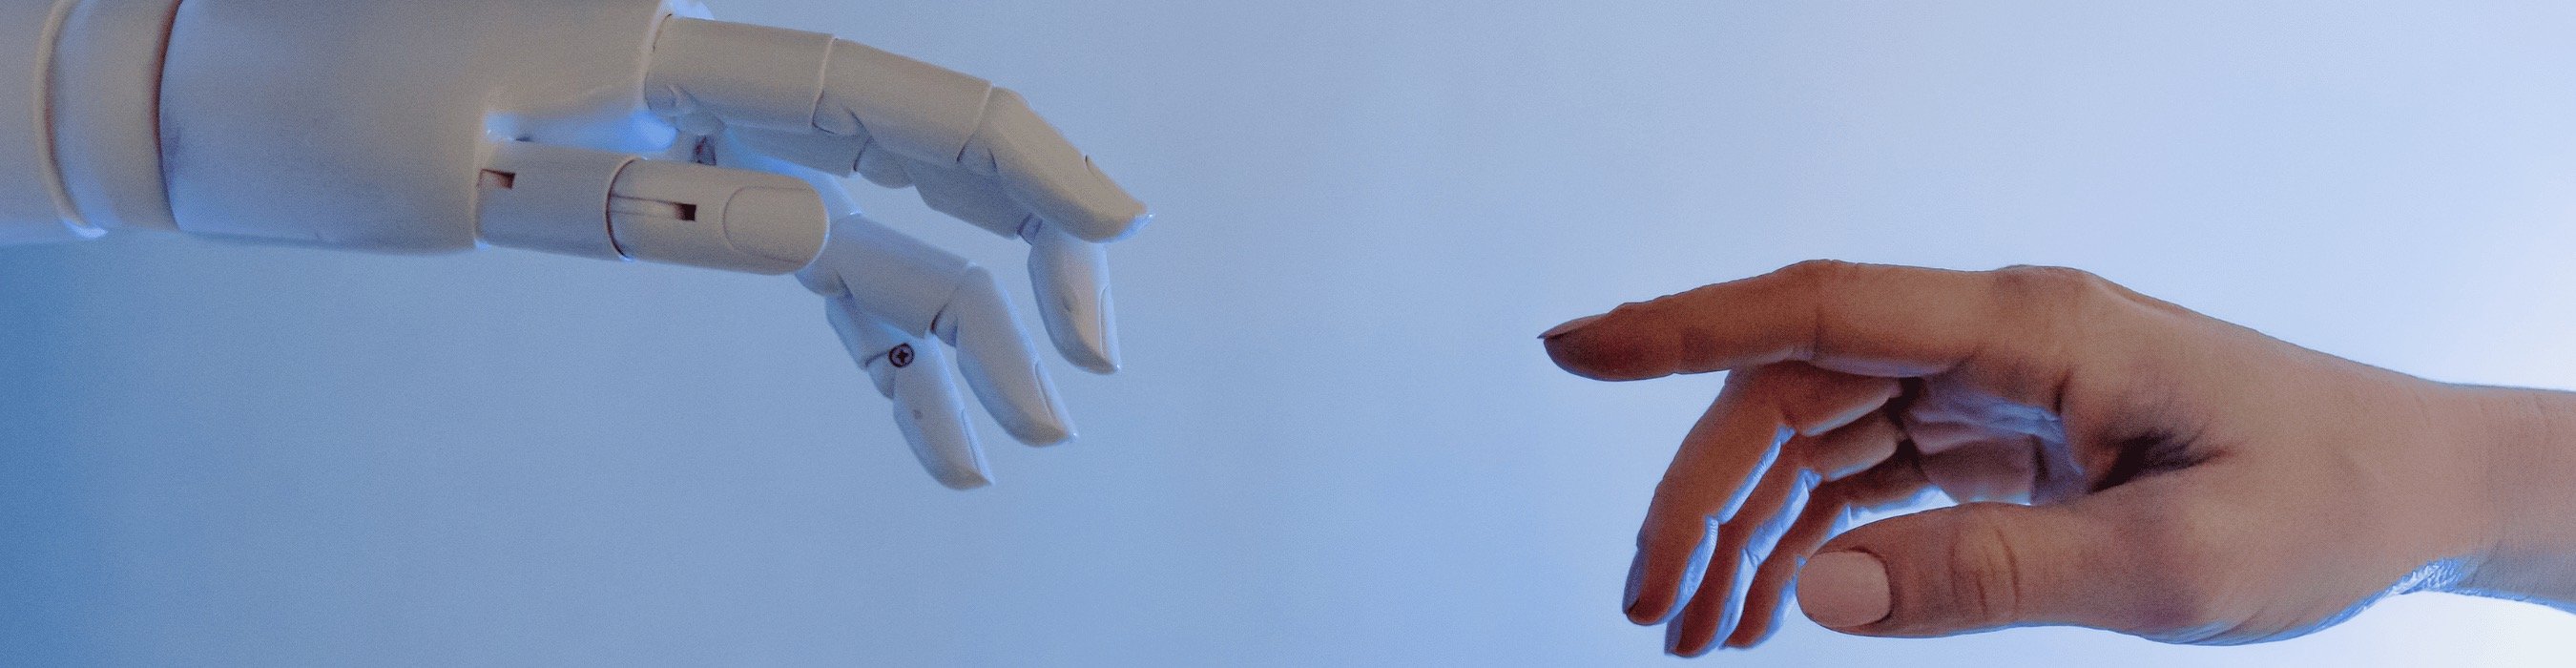 robot hand representing AI reaching out ot a human hand